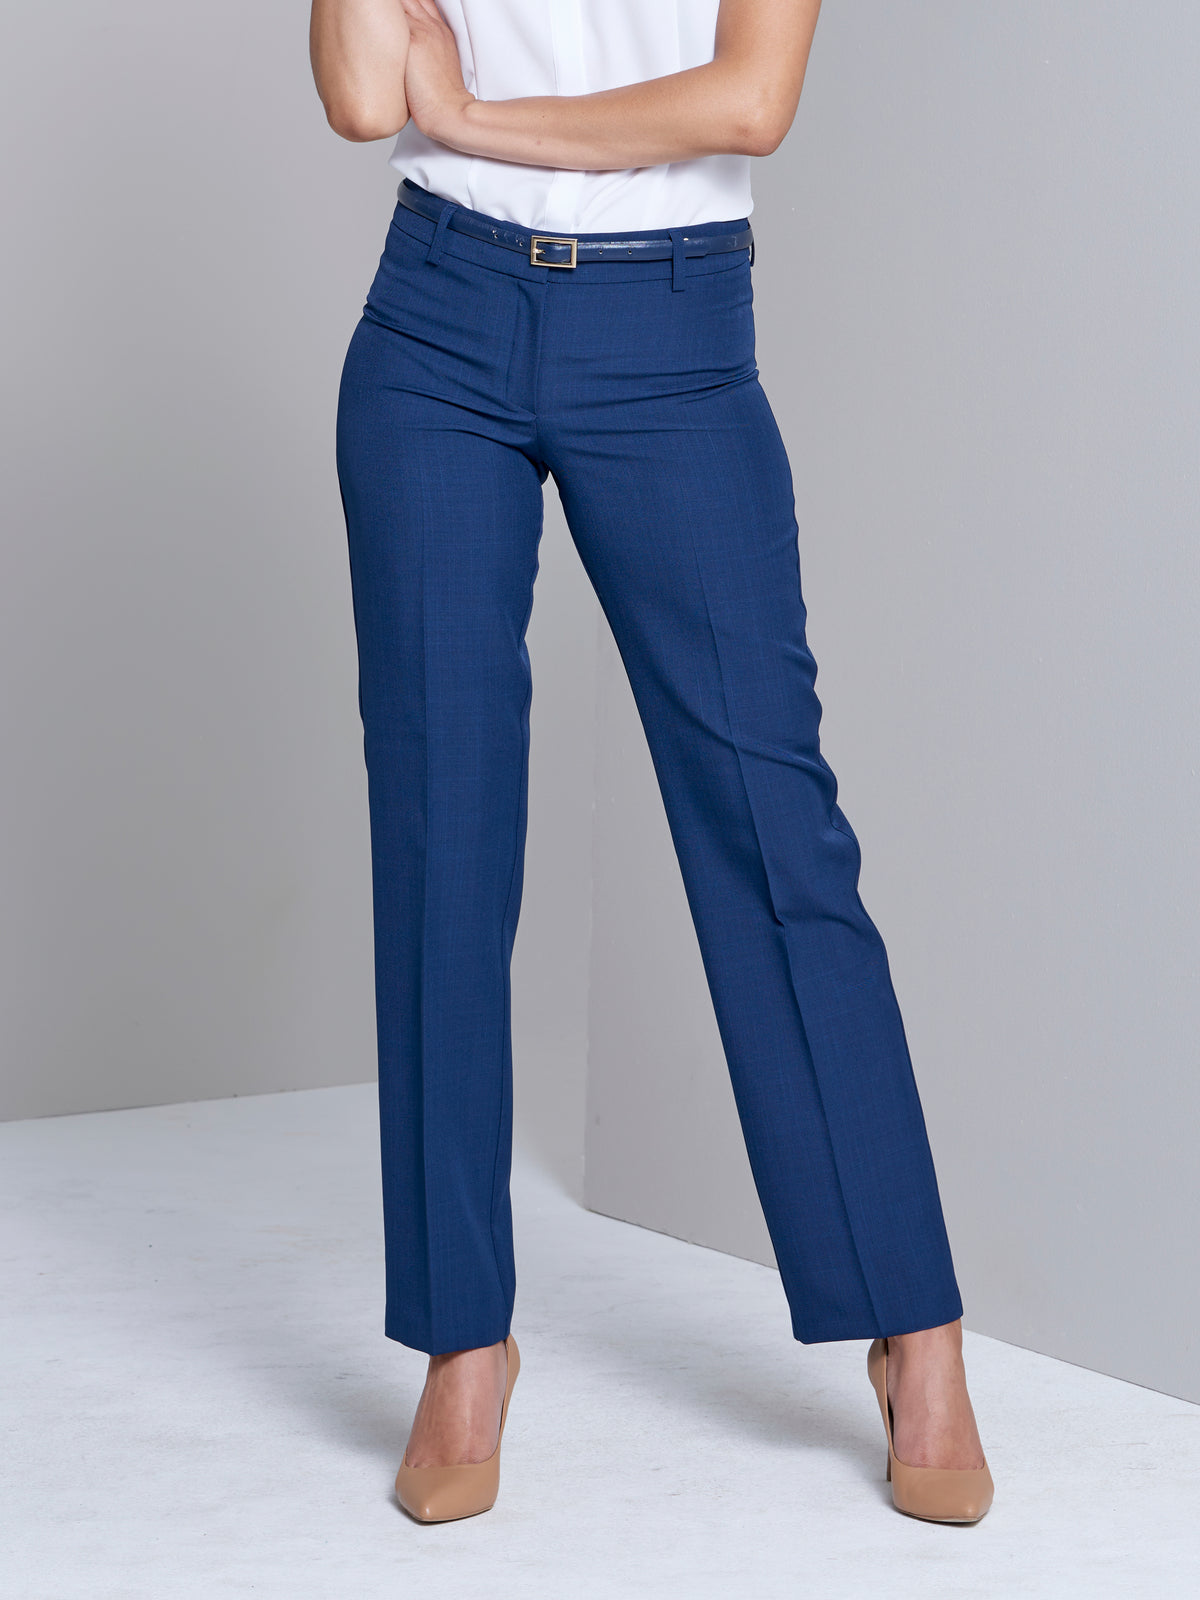 Christine tailored pants - light blue